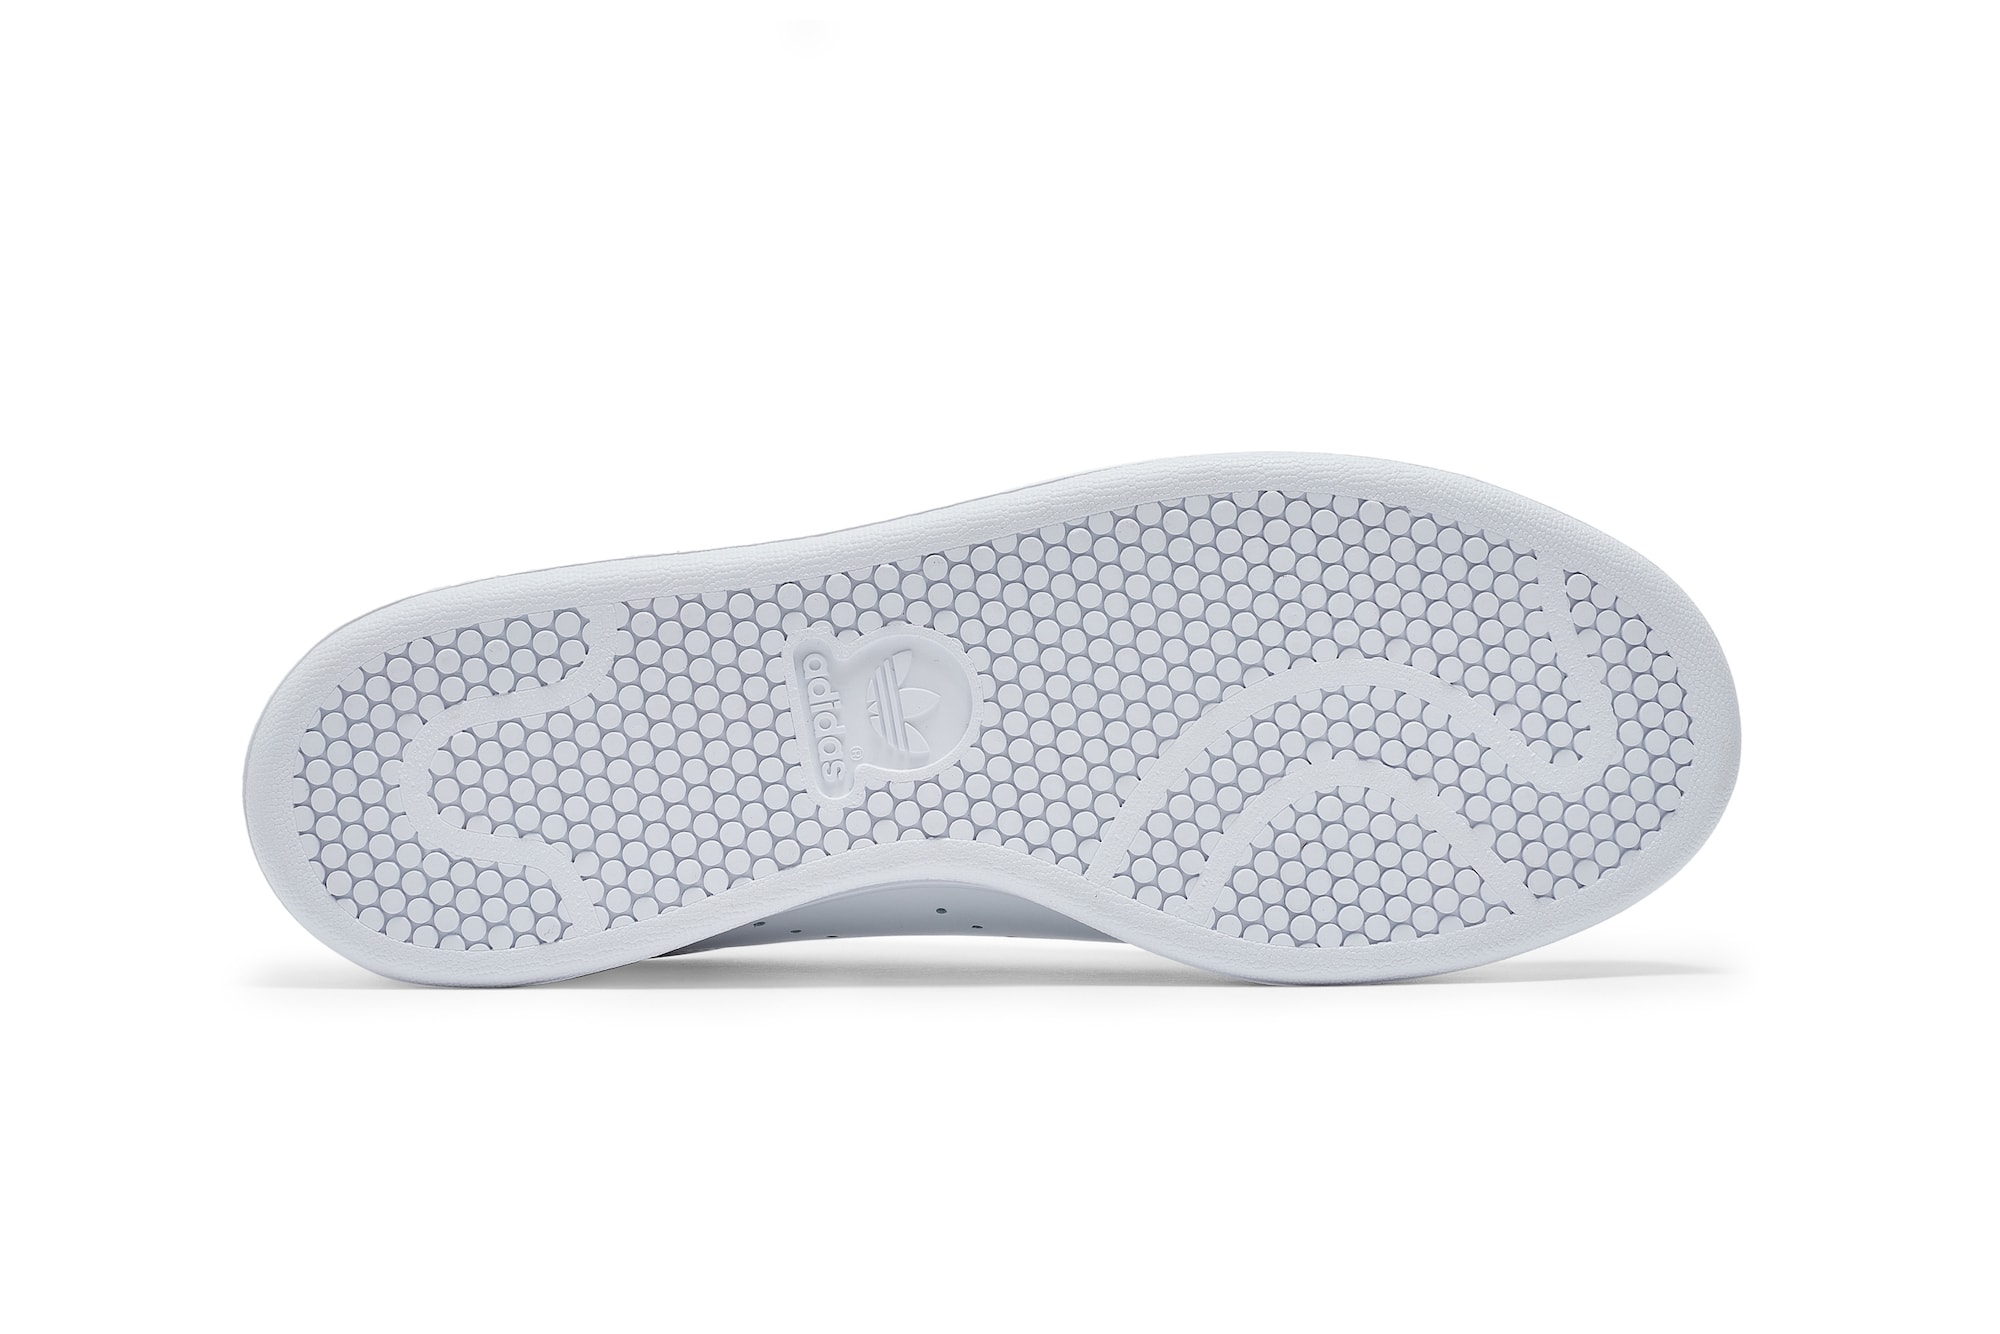 Dover Street Market x adidas Originals Stan Smith Sneaker Release Collaboration Black White Logo 